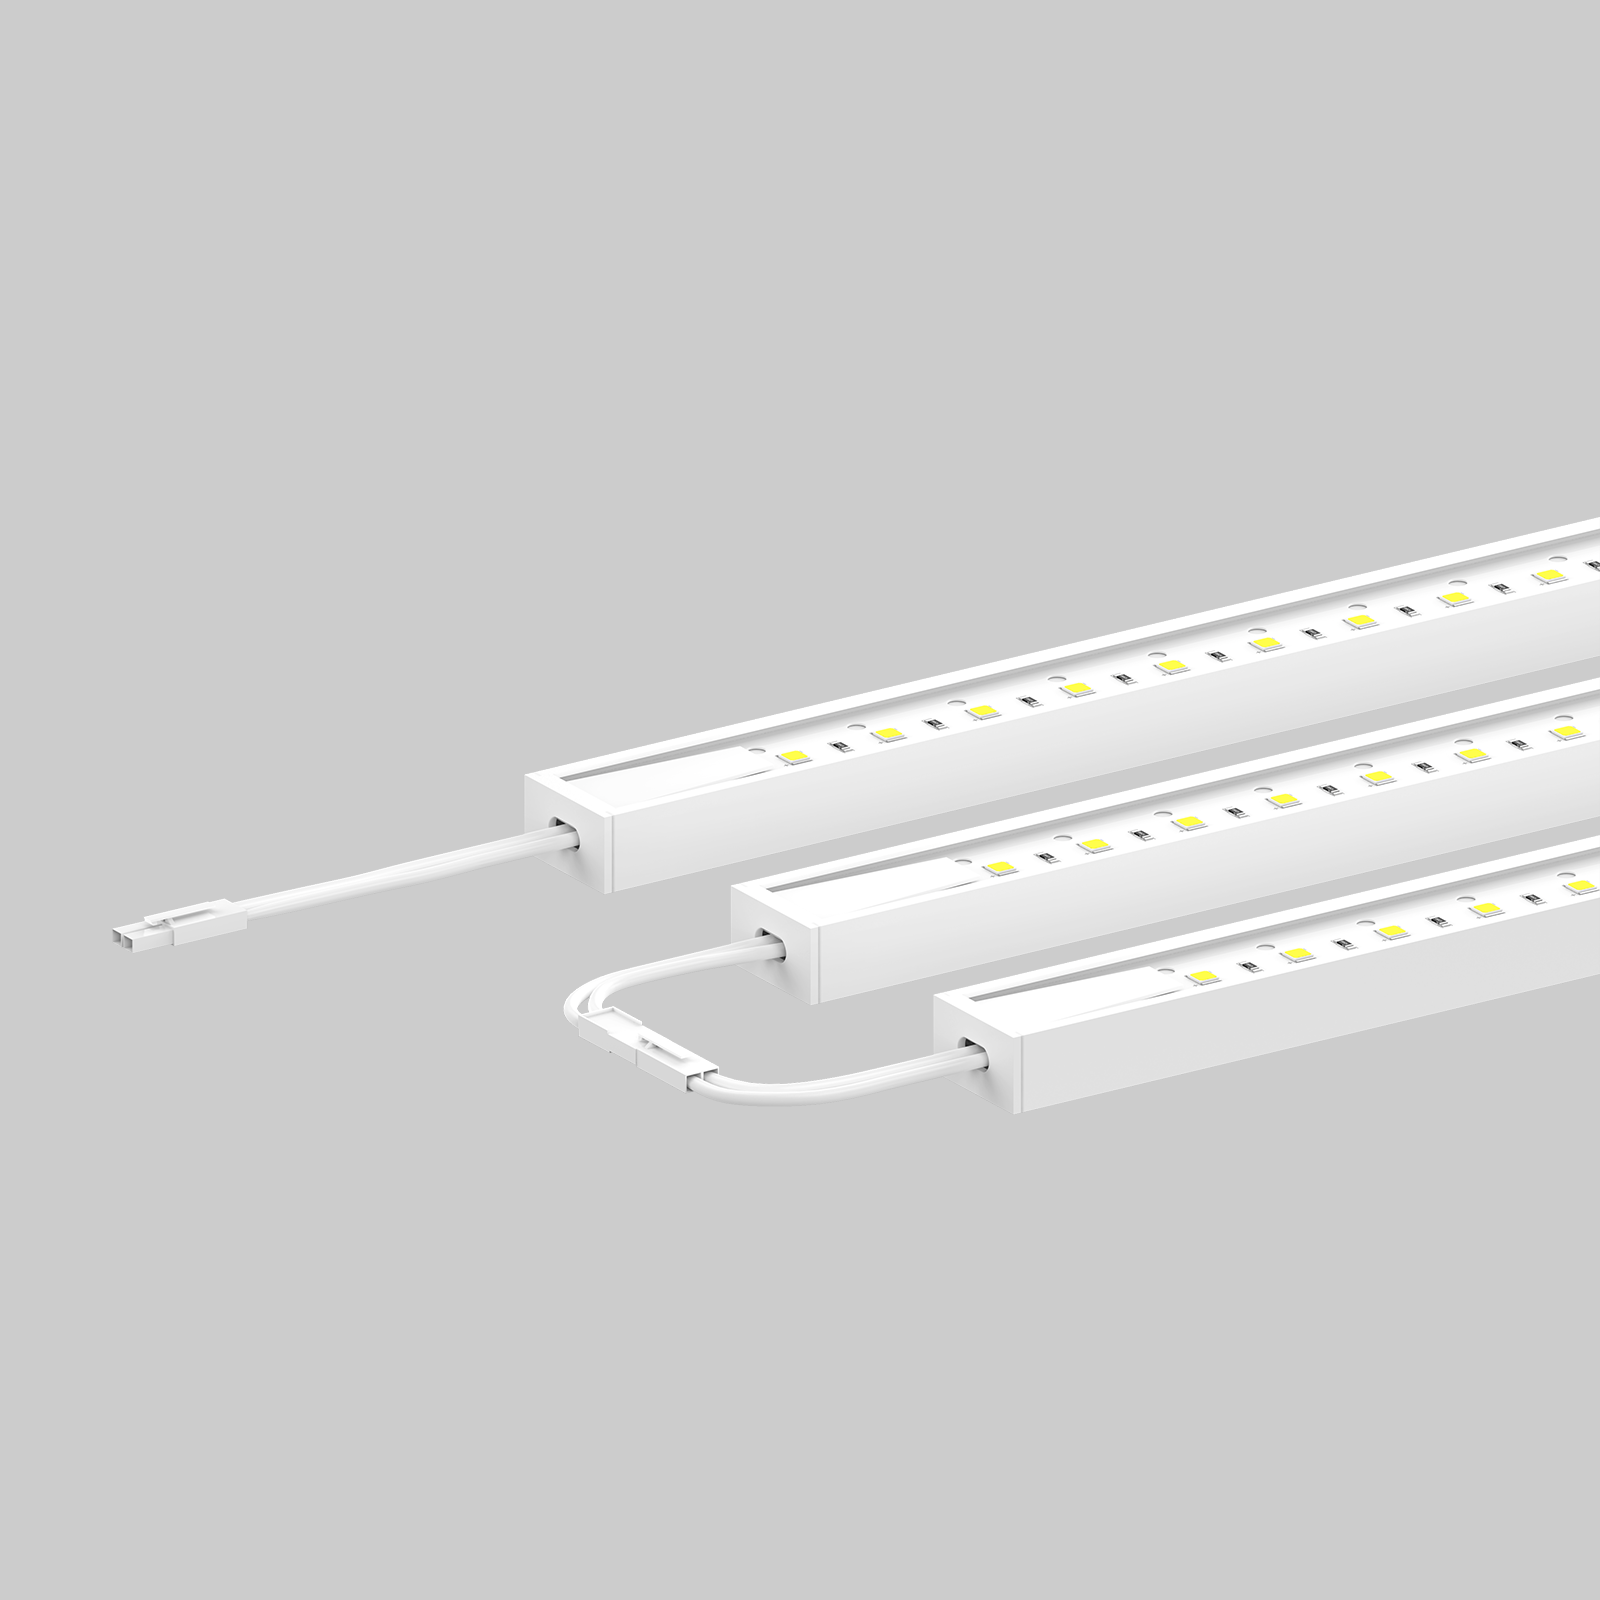 led-strip-light-120v-12-inch-3x3-6w-white-3x110lm